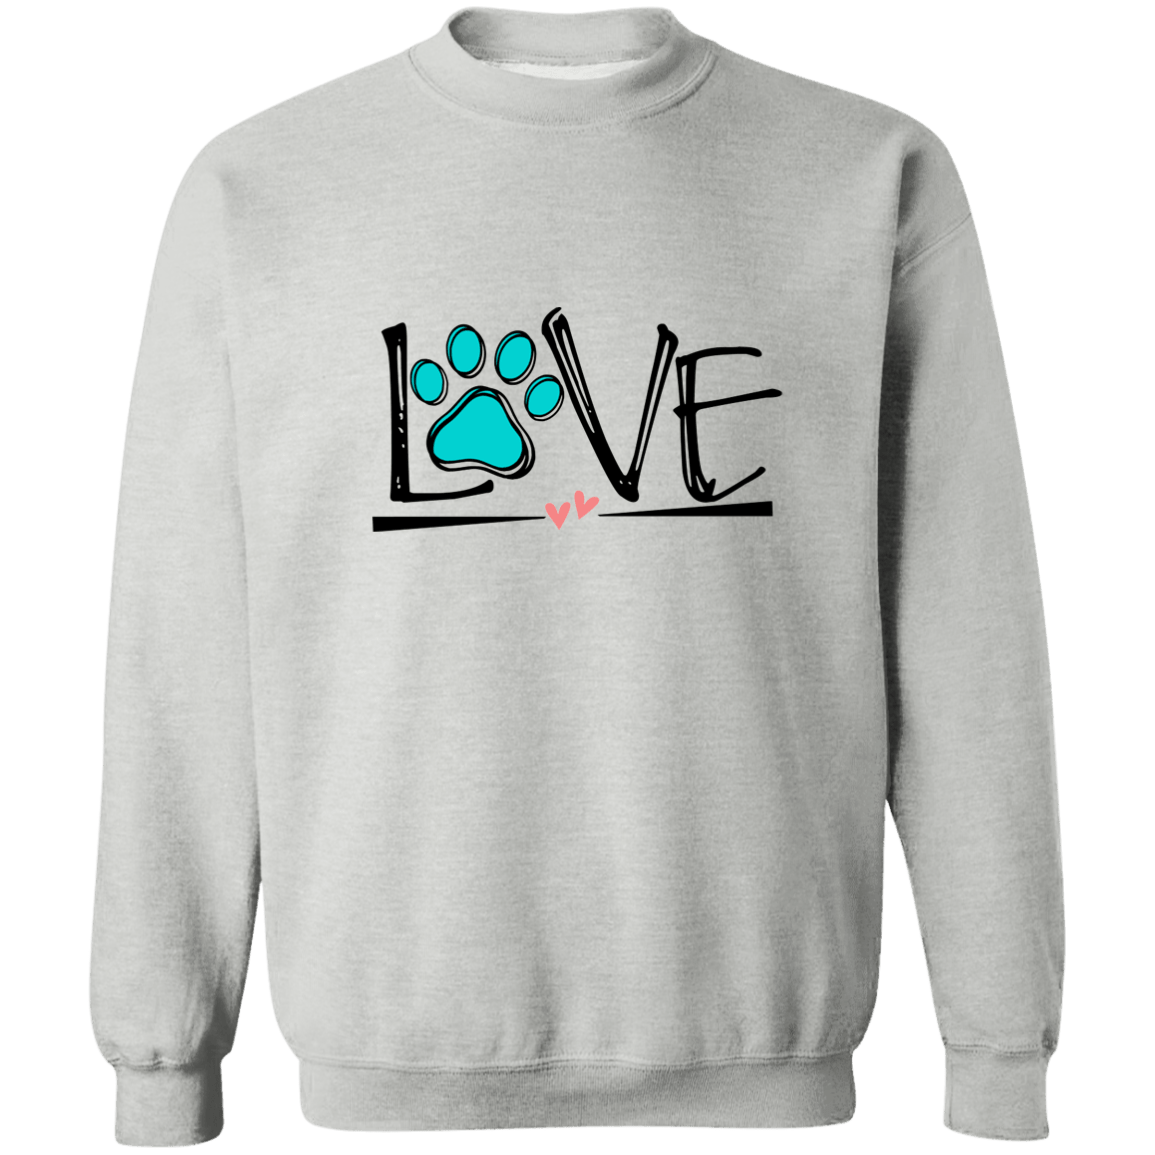 Crewneck Pullover Sweatshirt (black print)- LOVE with a paw print